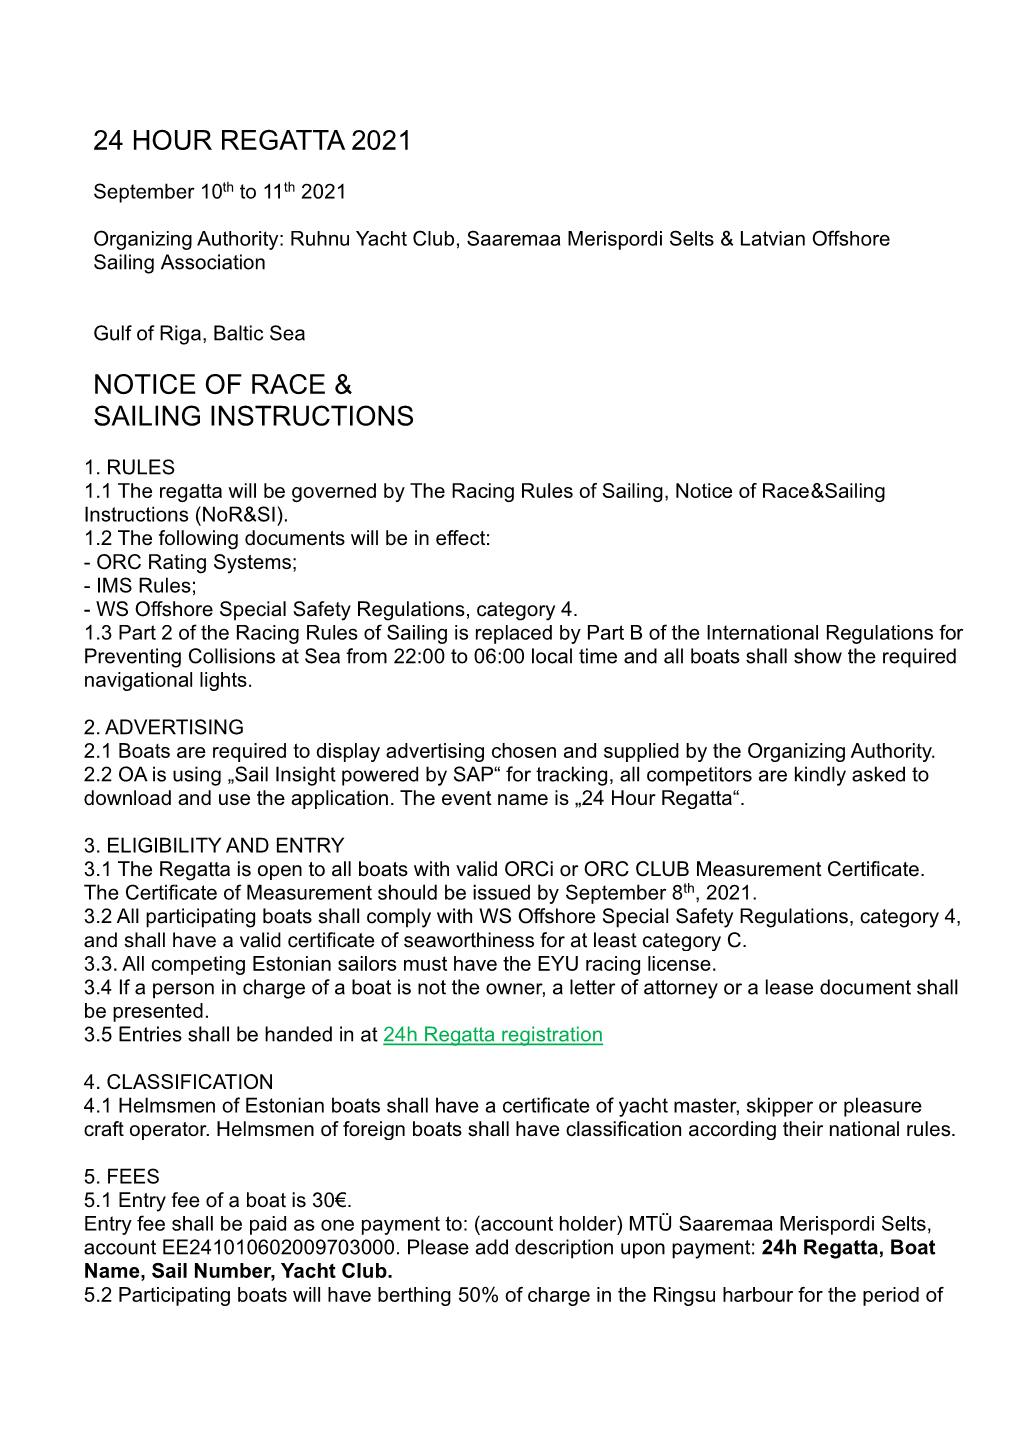 24 Hour Regatta 2021 Notice of Race & Sailing Instructions